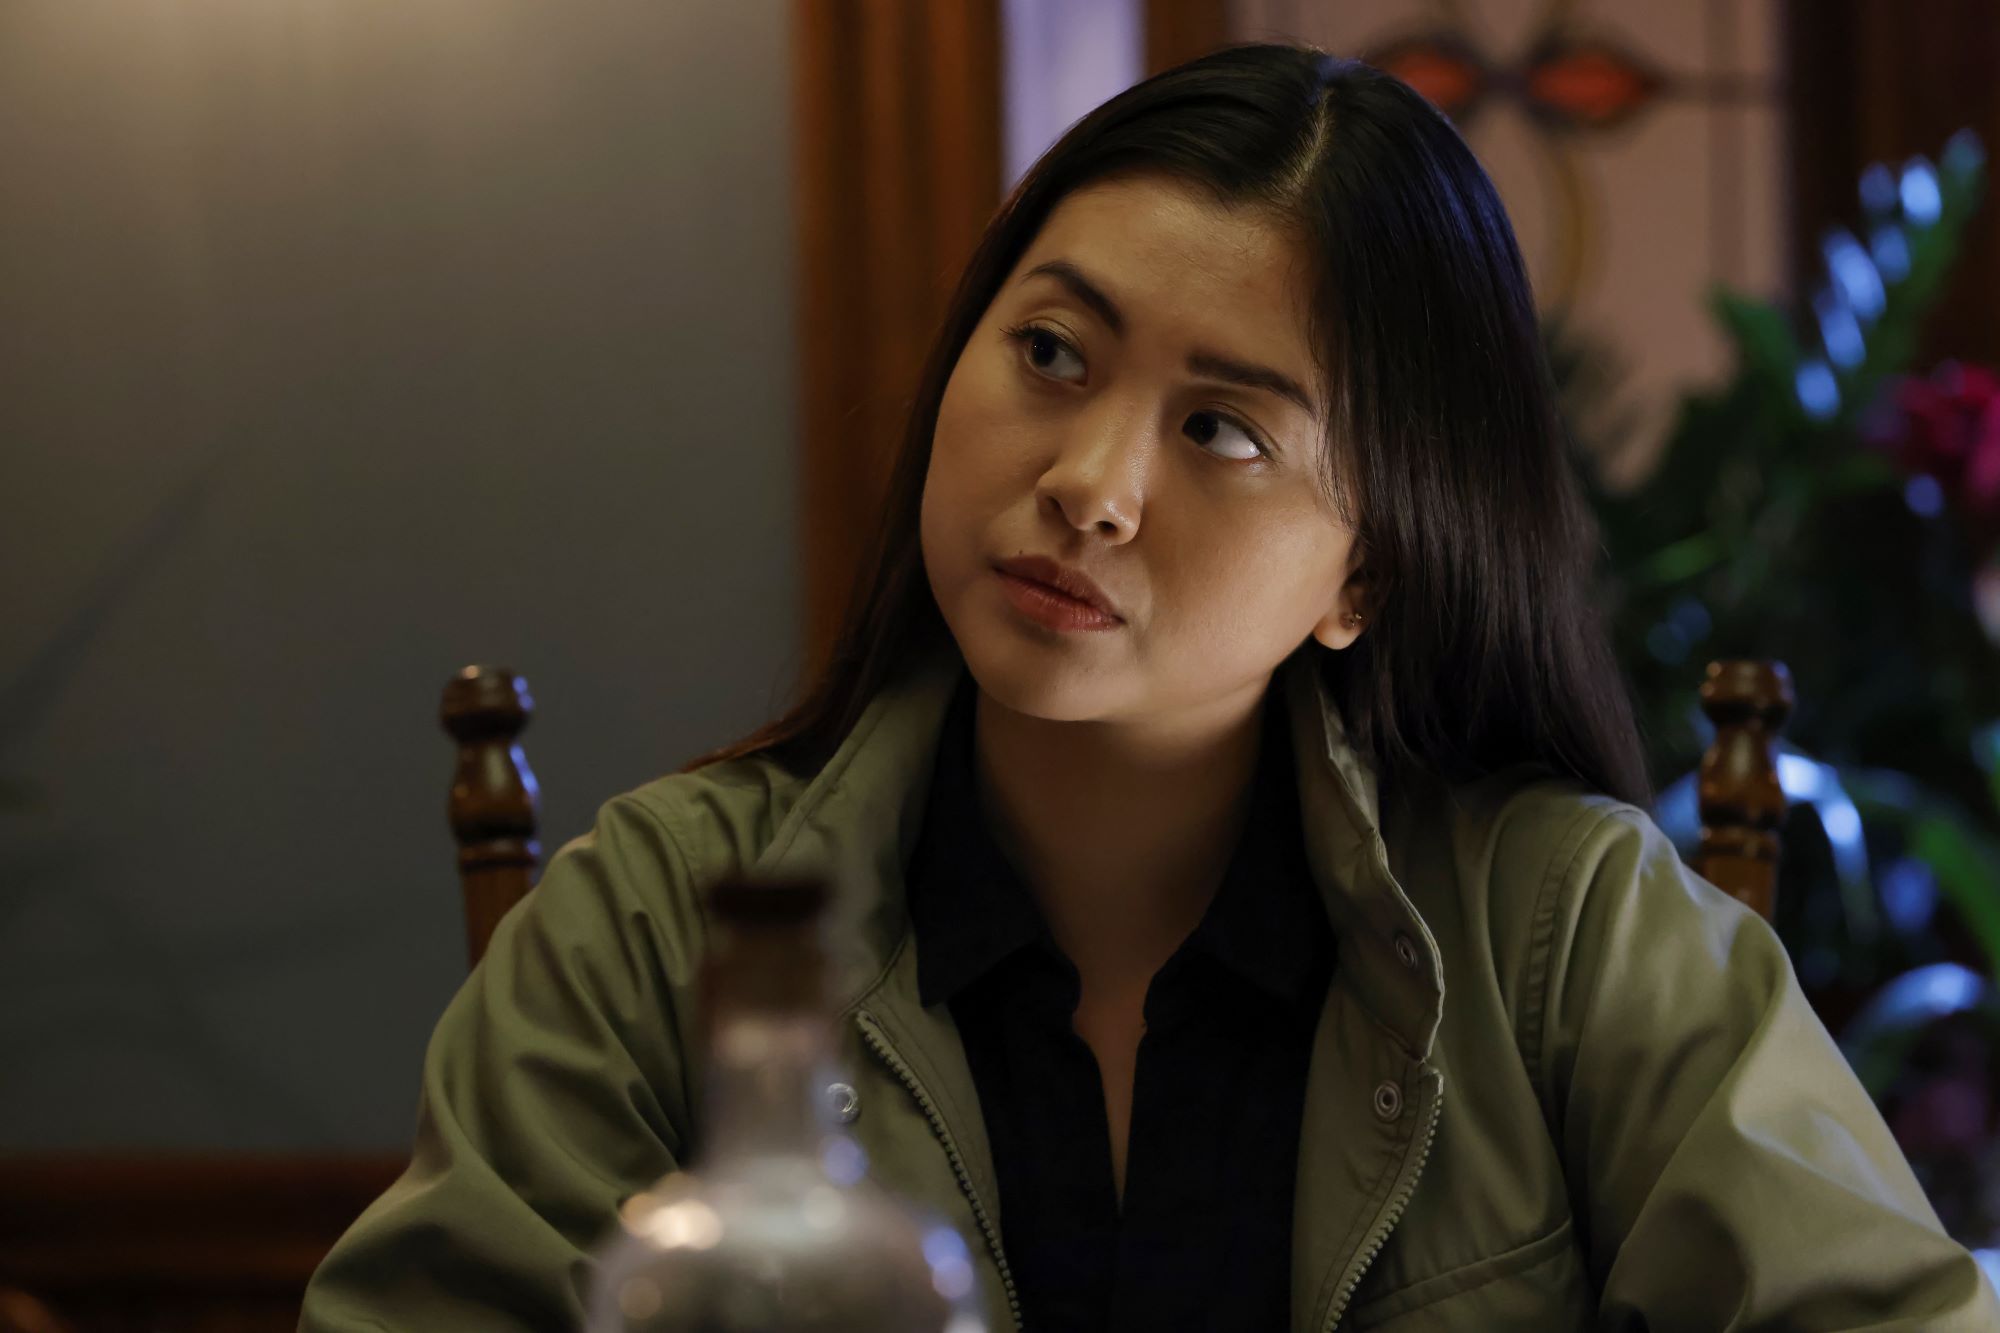 'The Blacklist' Season 9 star Laura Sohn, in character as Alina Park, wears a green jacket over a black shirt.